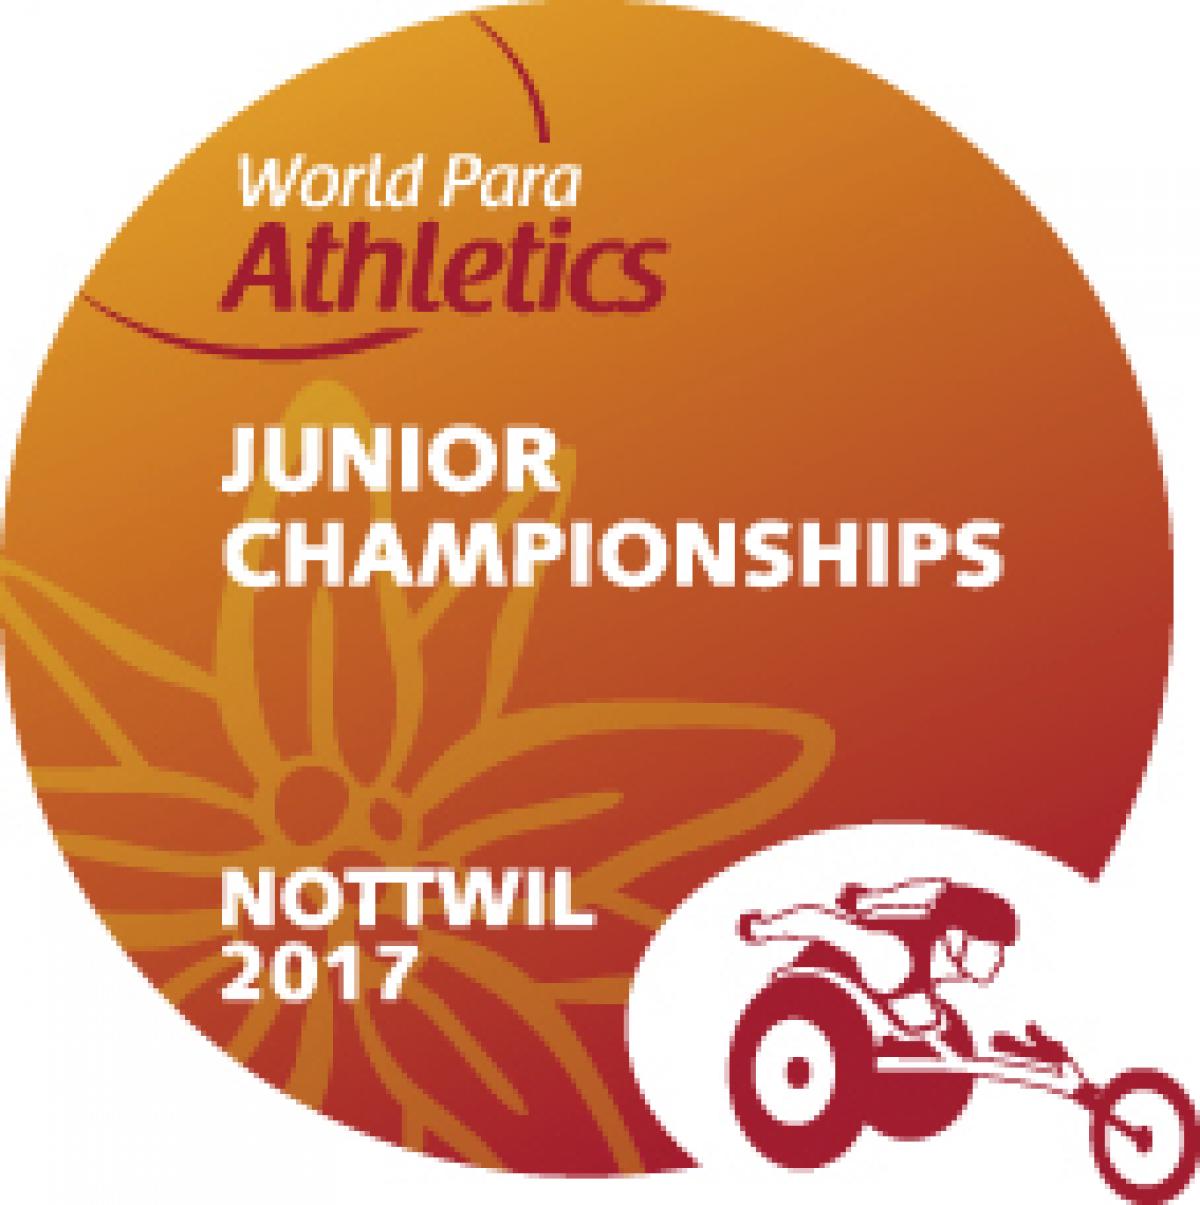 Nottwil 2017 World Para Athletics Junior Championships logo